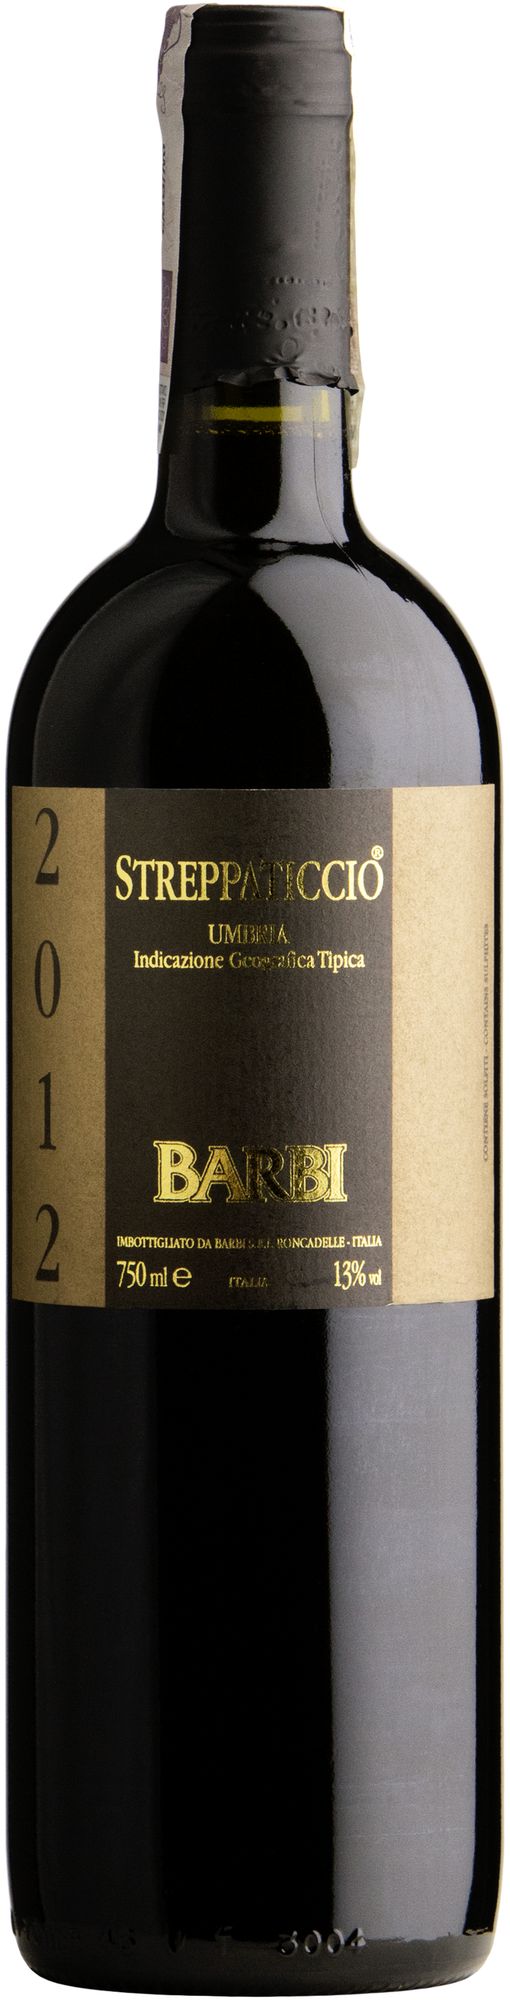 Wino Barbi Streppaticcio Umbria IGT